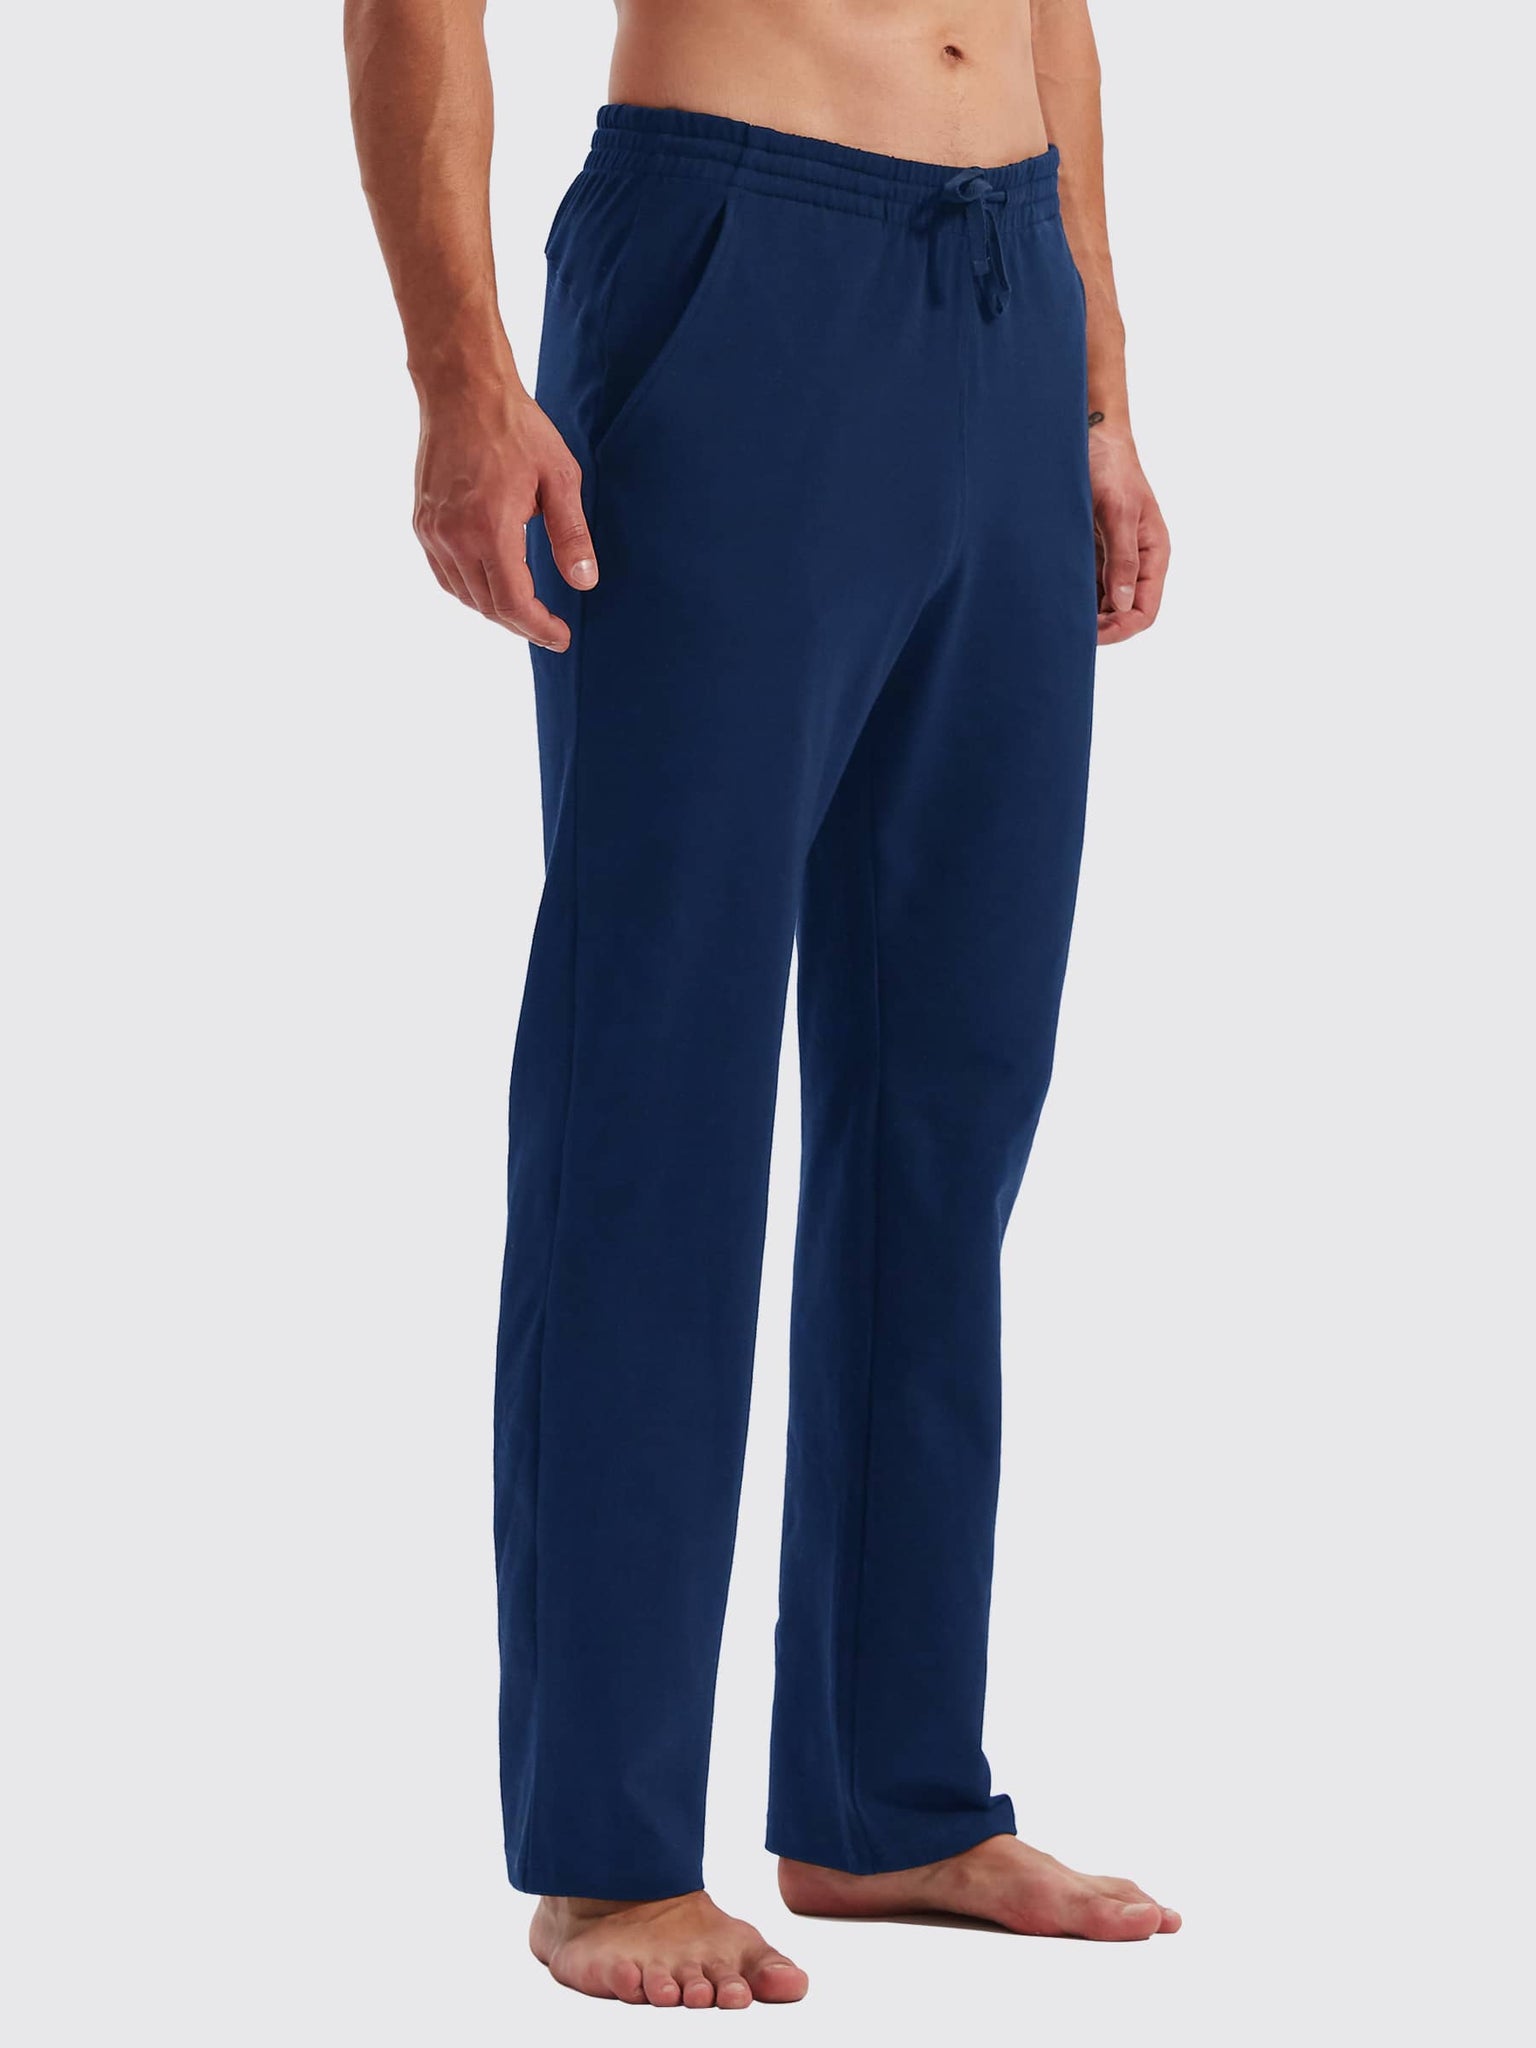 Men's Cotton Yoga Balance Sweatpants_Navy_model3